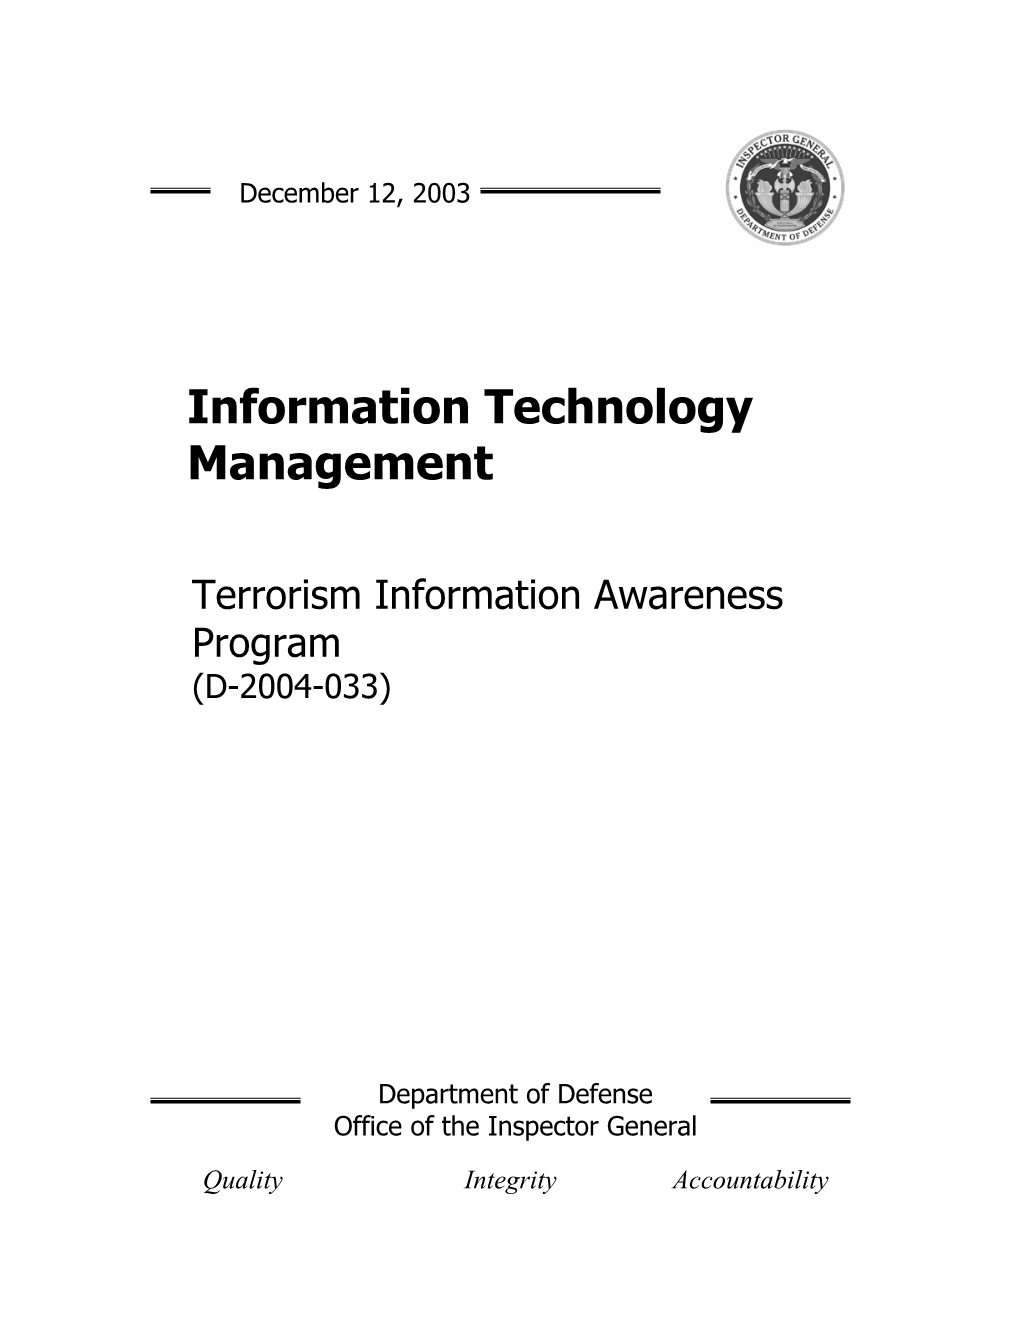 Terrorism Information Awareness Program (D-2004-033)